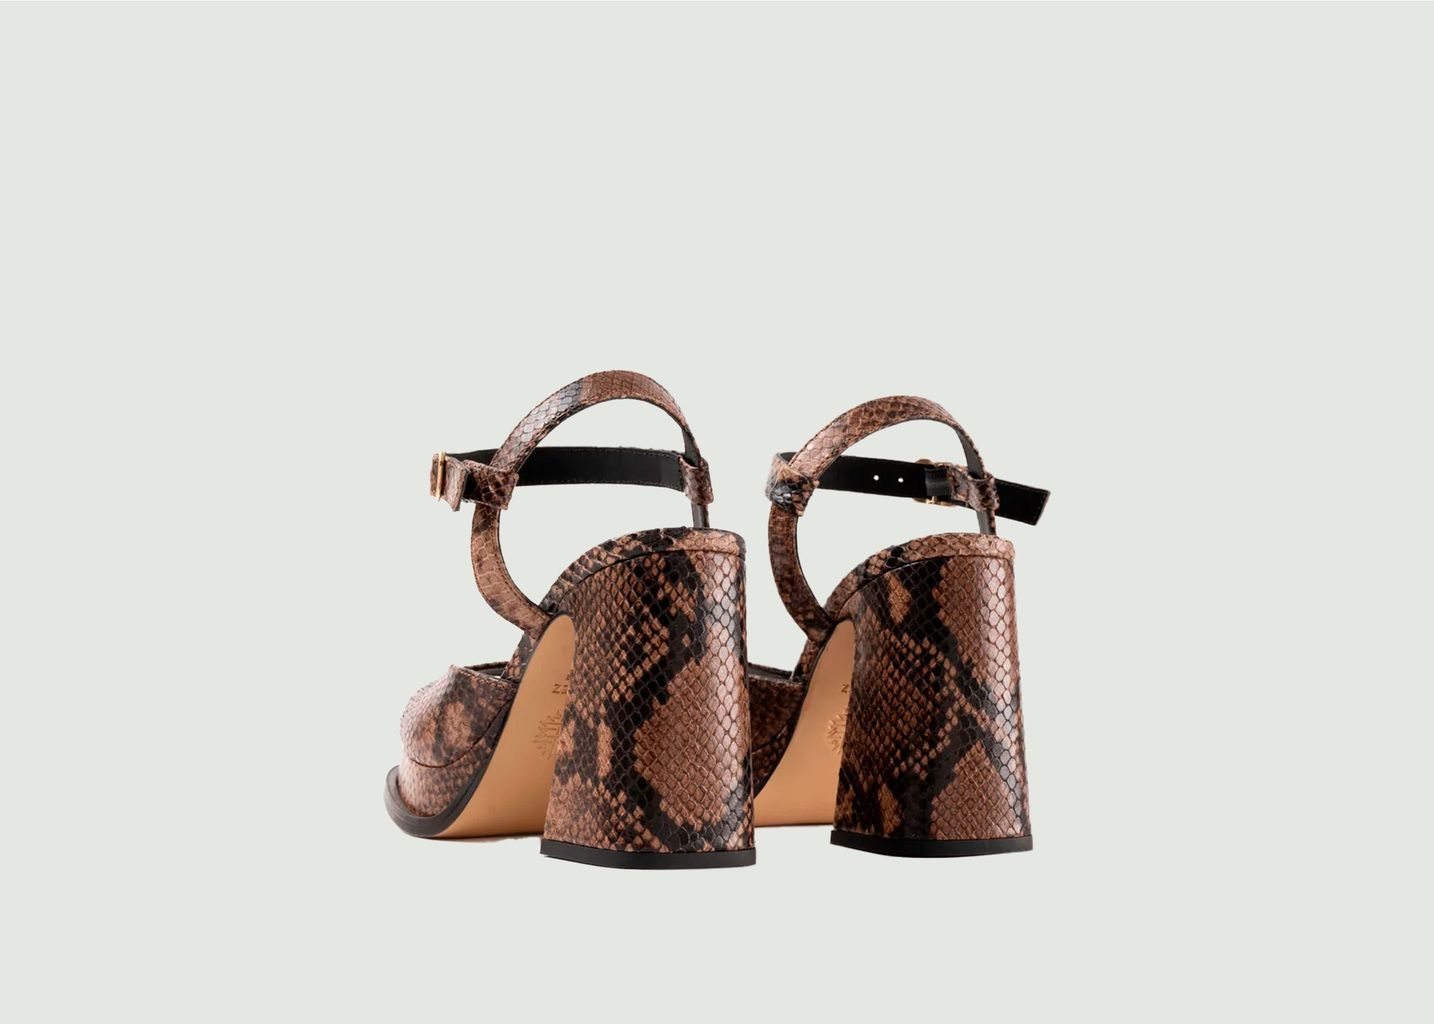 Gracia python-effect leather platform sandals with heels - Souliers Martinez